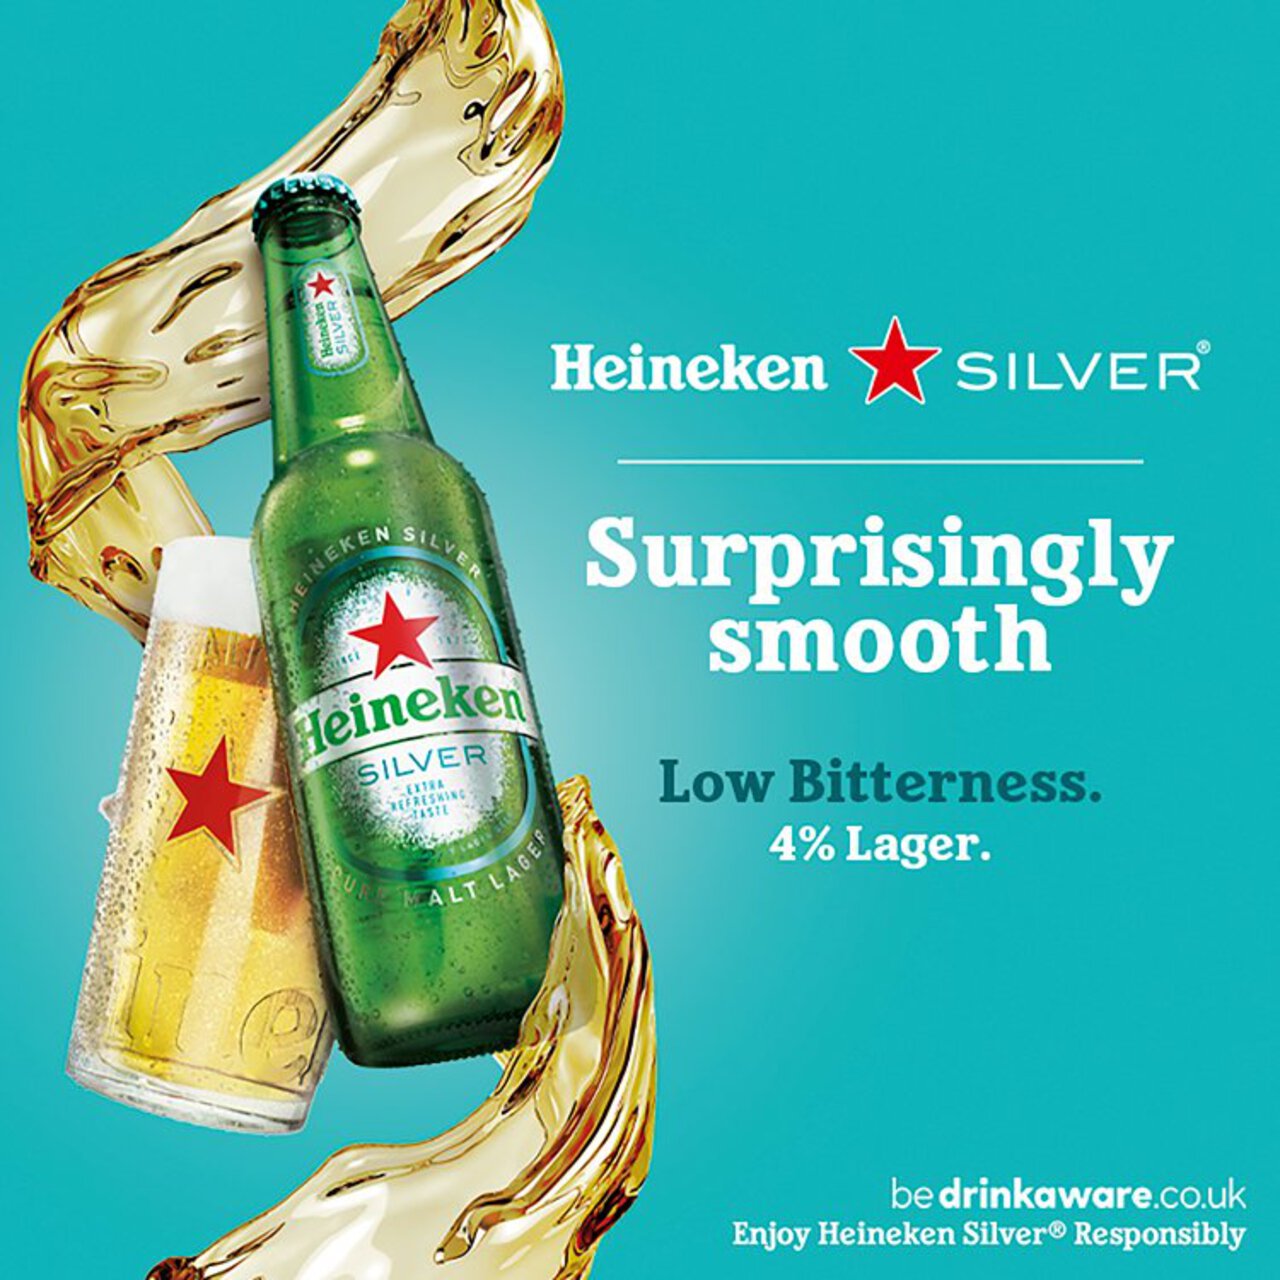 Heineken Silver Lager Beer Bottles 12 x 330ml